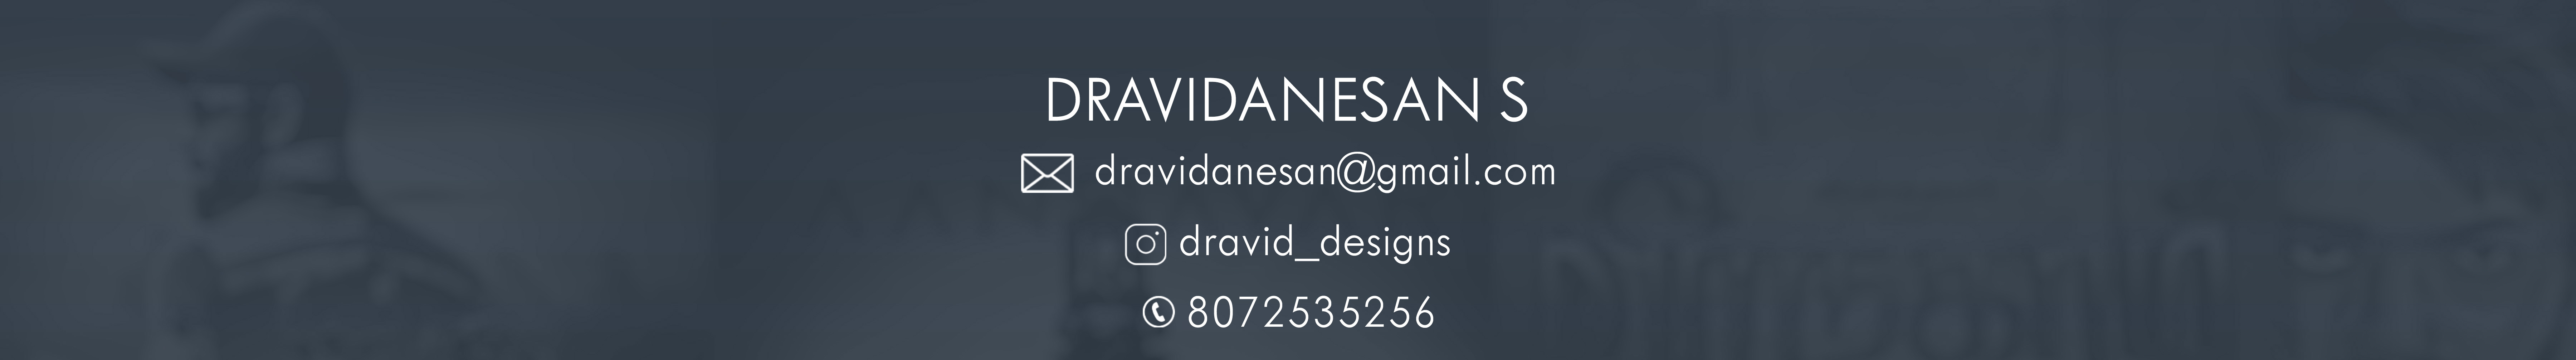 Dravidanesan S's profile banner